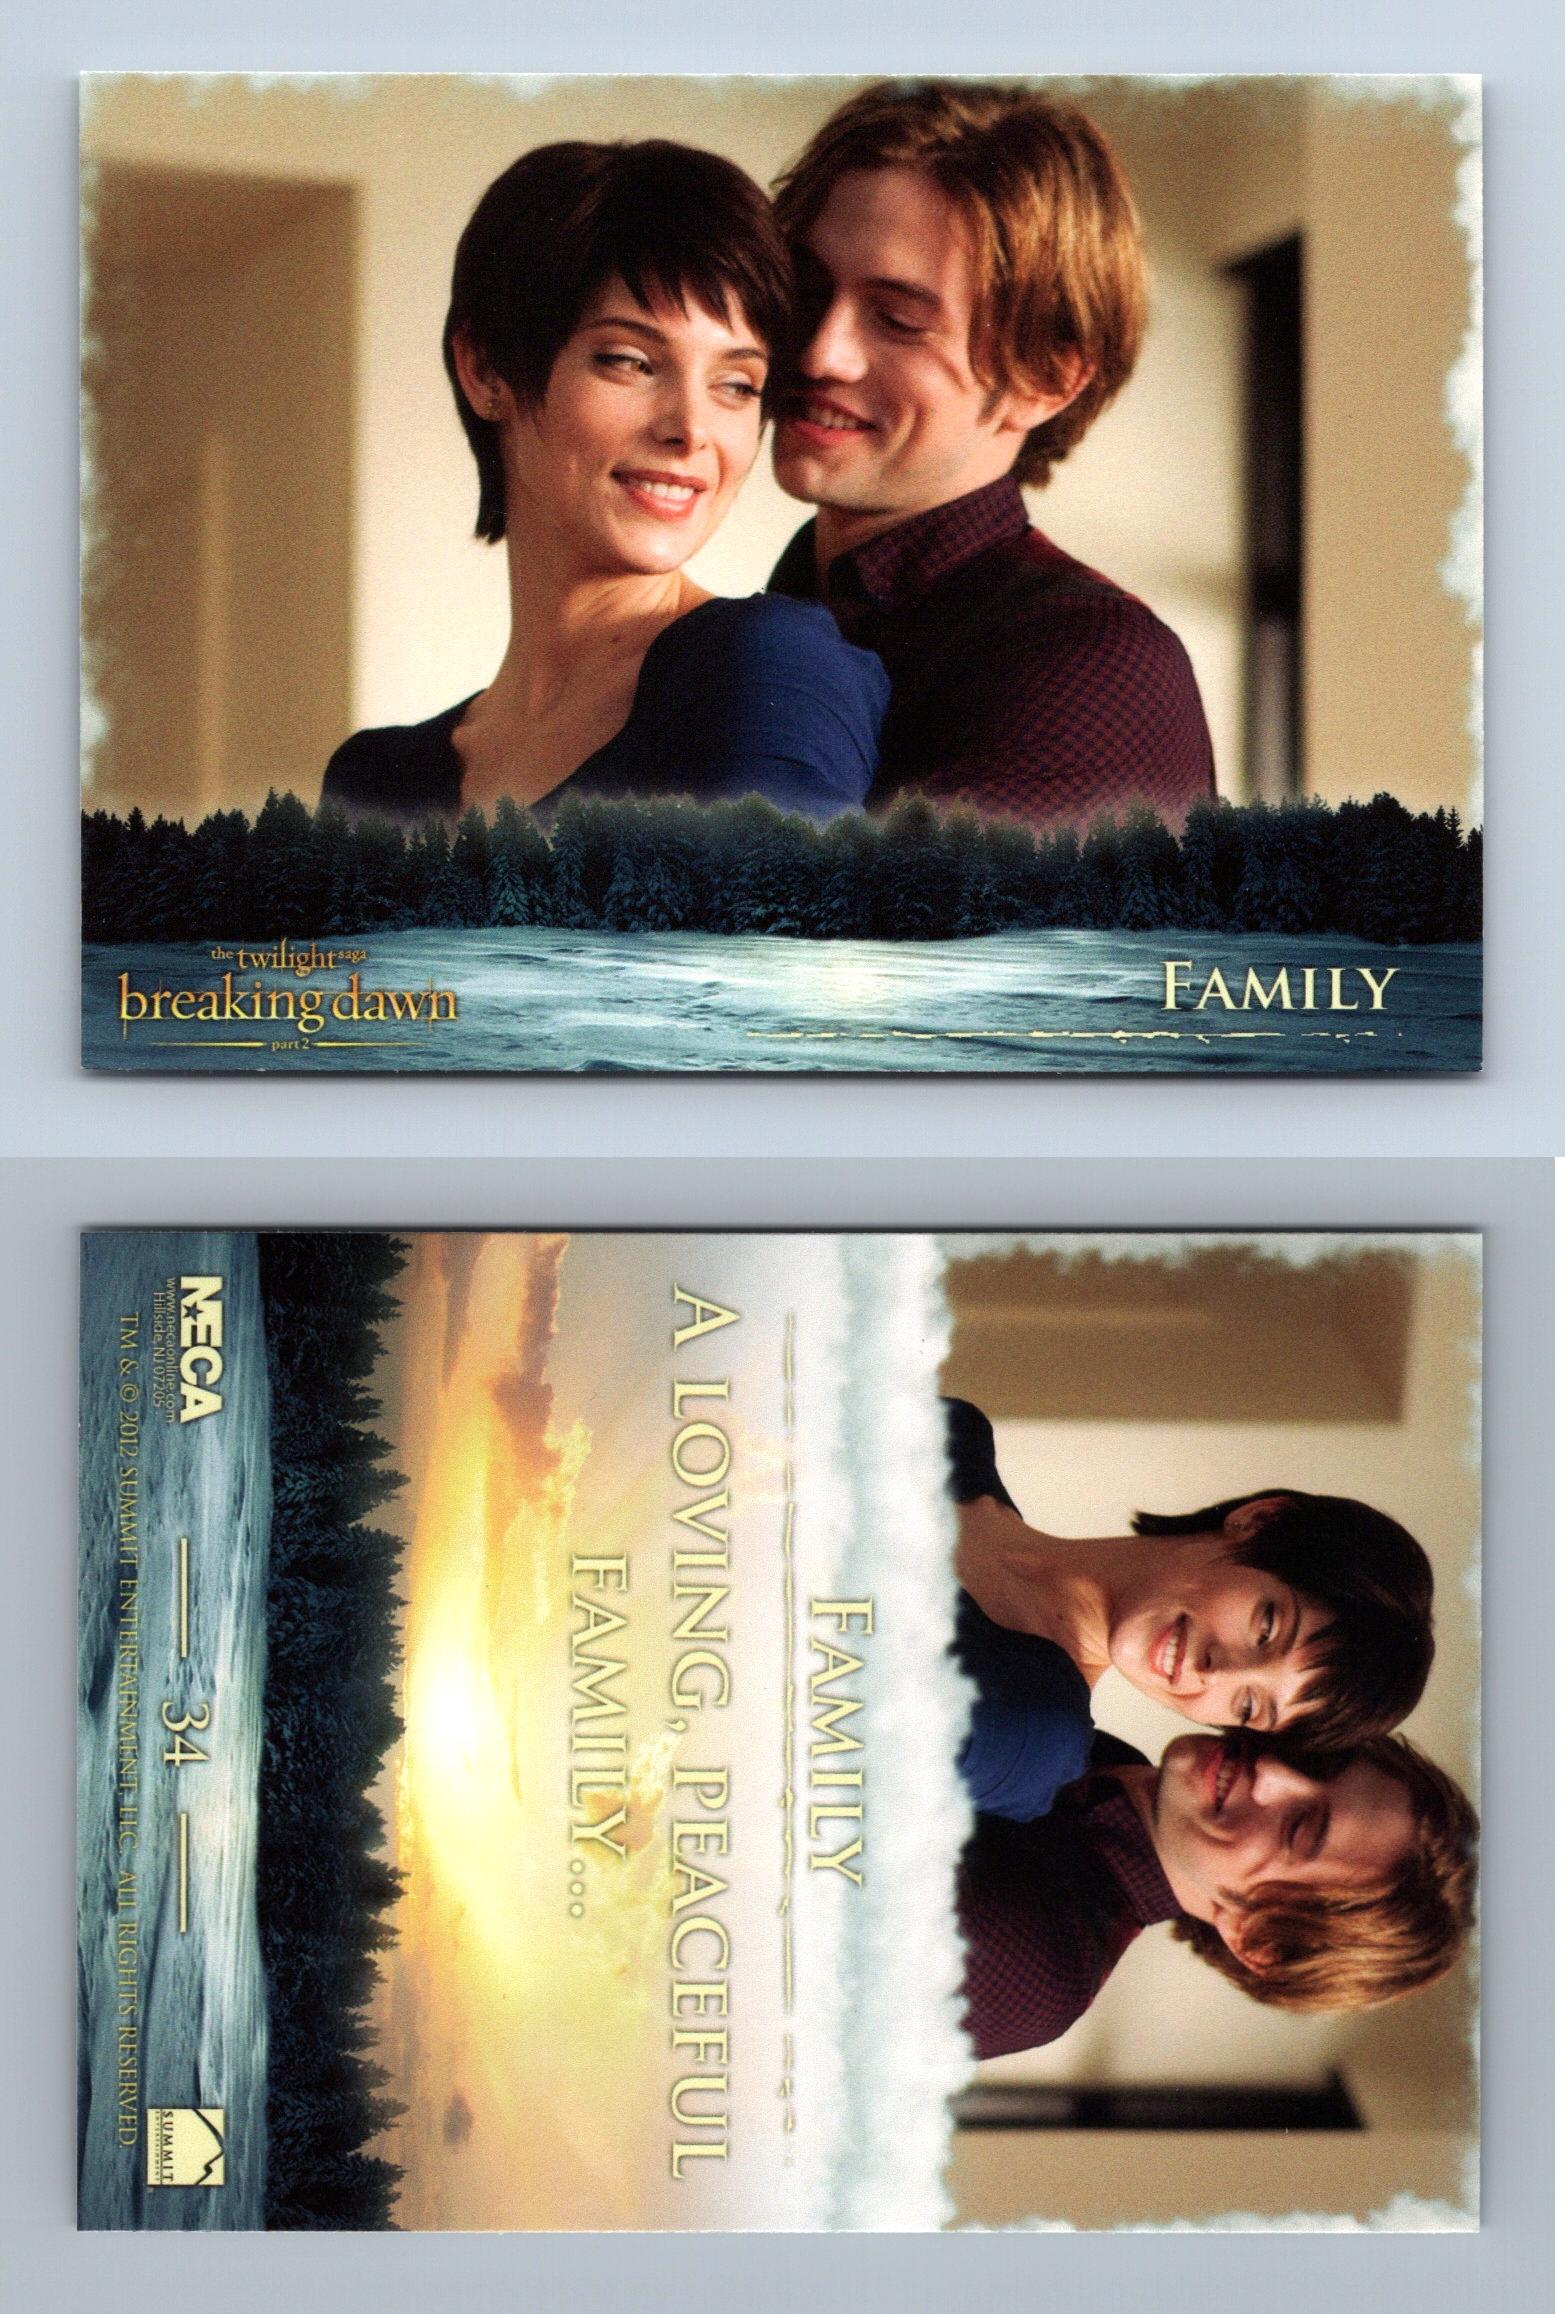 C1650 Family #34 Twilight Breaking Dawn Part 2 Neca 2012 Trade Card 